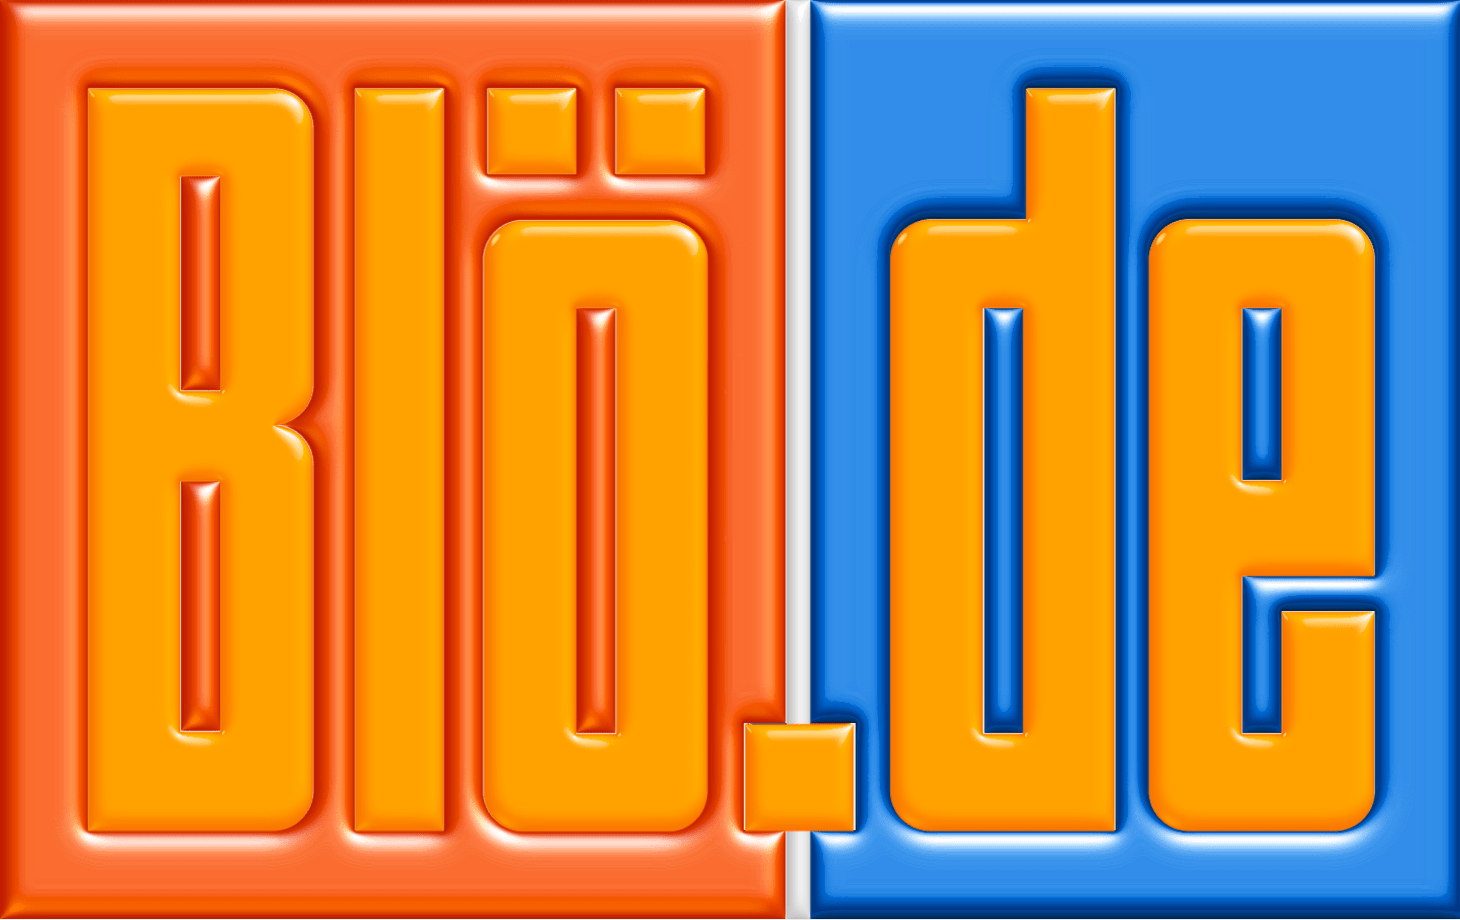 Bloede-Logo-Bild-Kids-Format